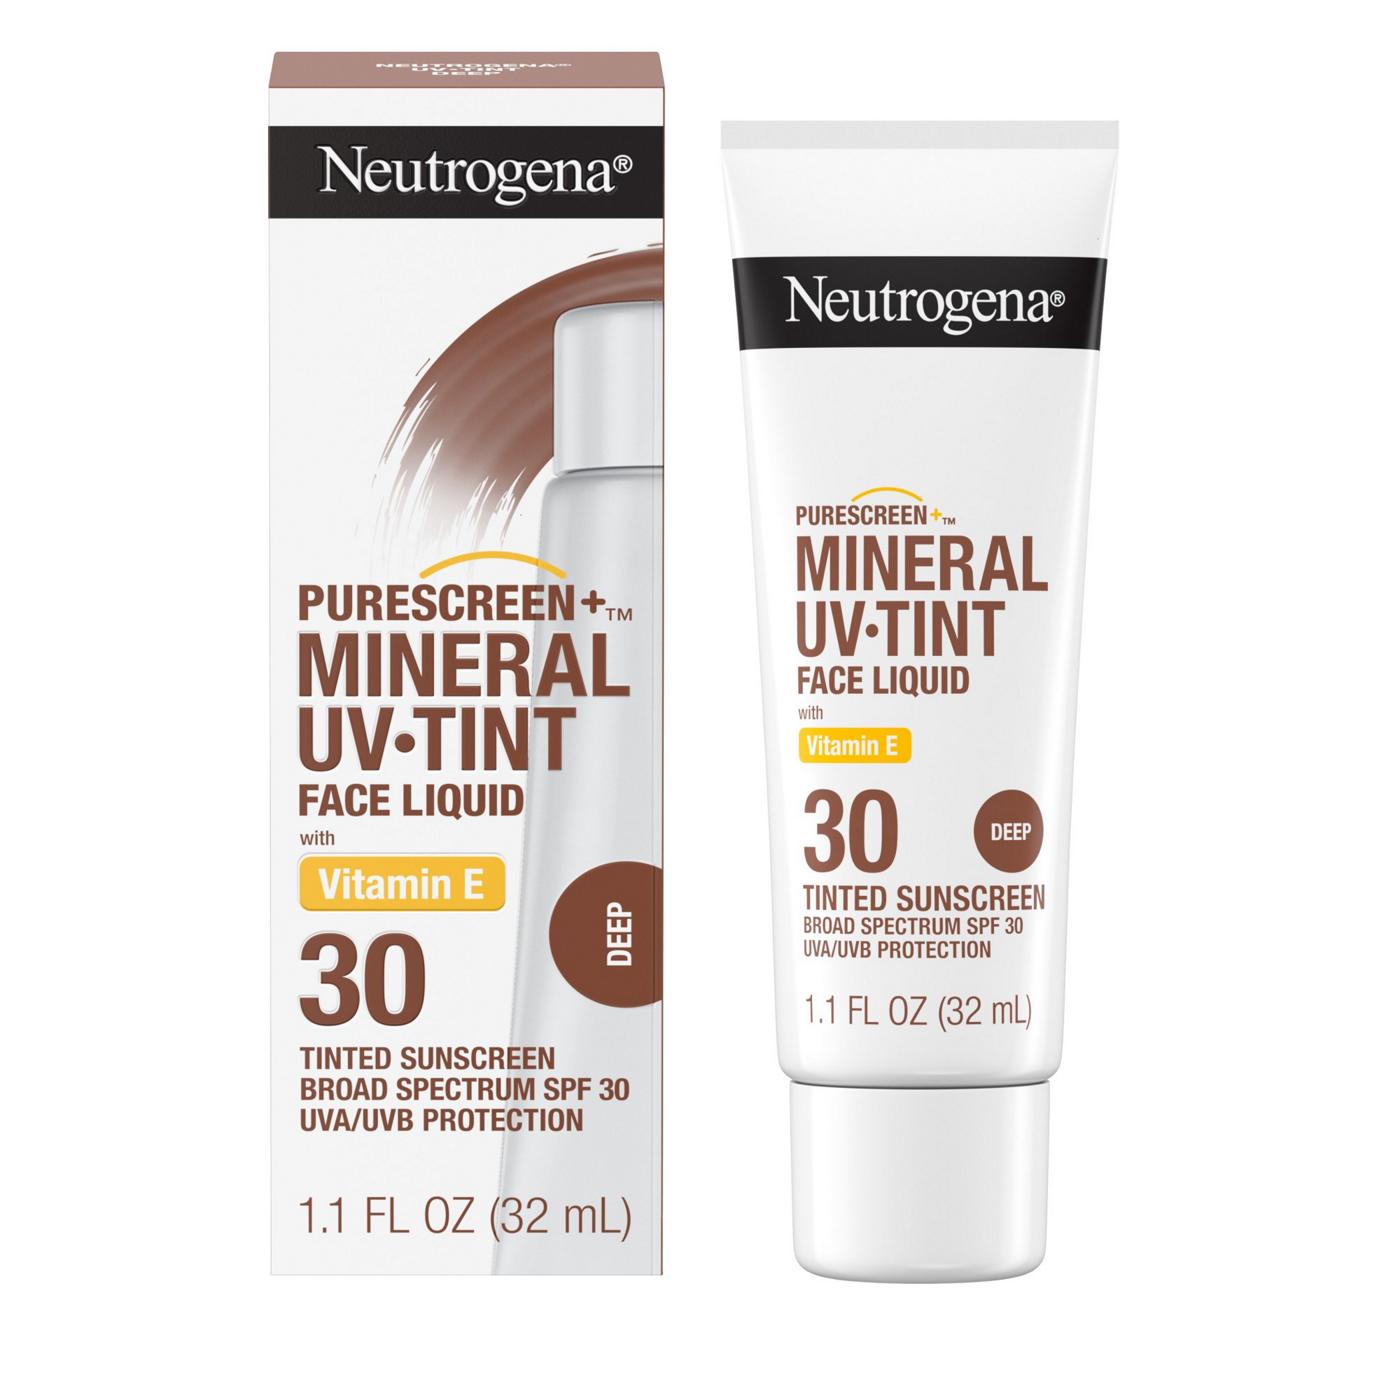 Neutrogena Purescreen+ Mineral Uv Tint Face Liquid With Vitamin E, Tinted Sunscreen Broad Spectrum SPF 30, Deep; image 6 of 8